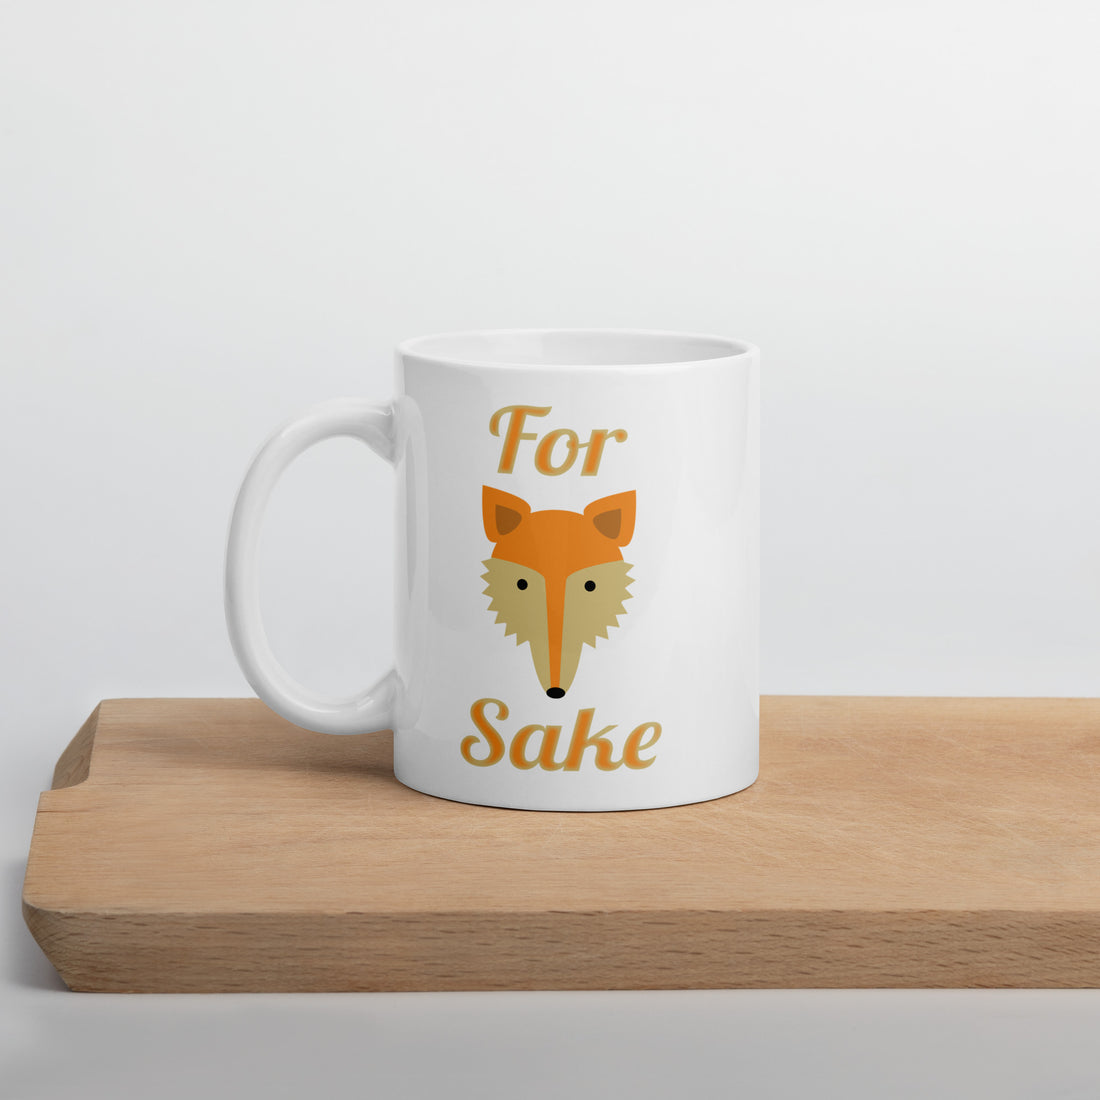 For Fox Sake White glossy mug